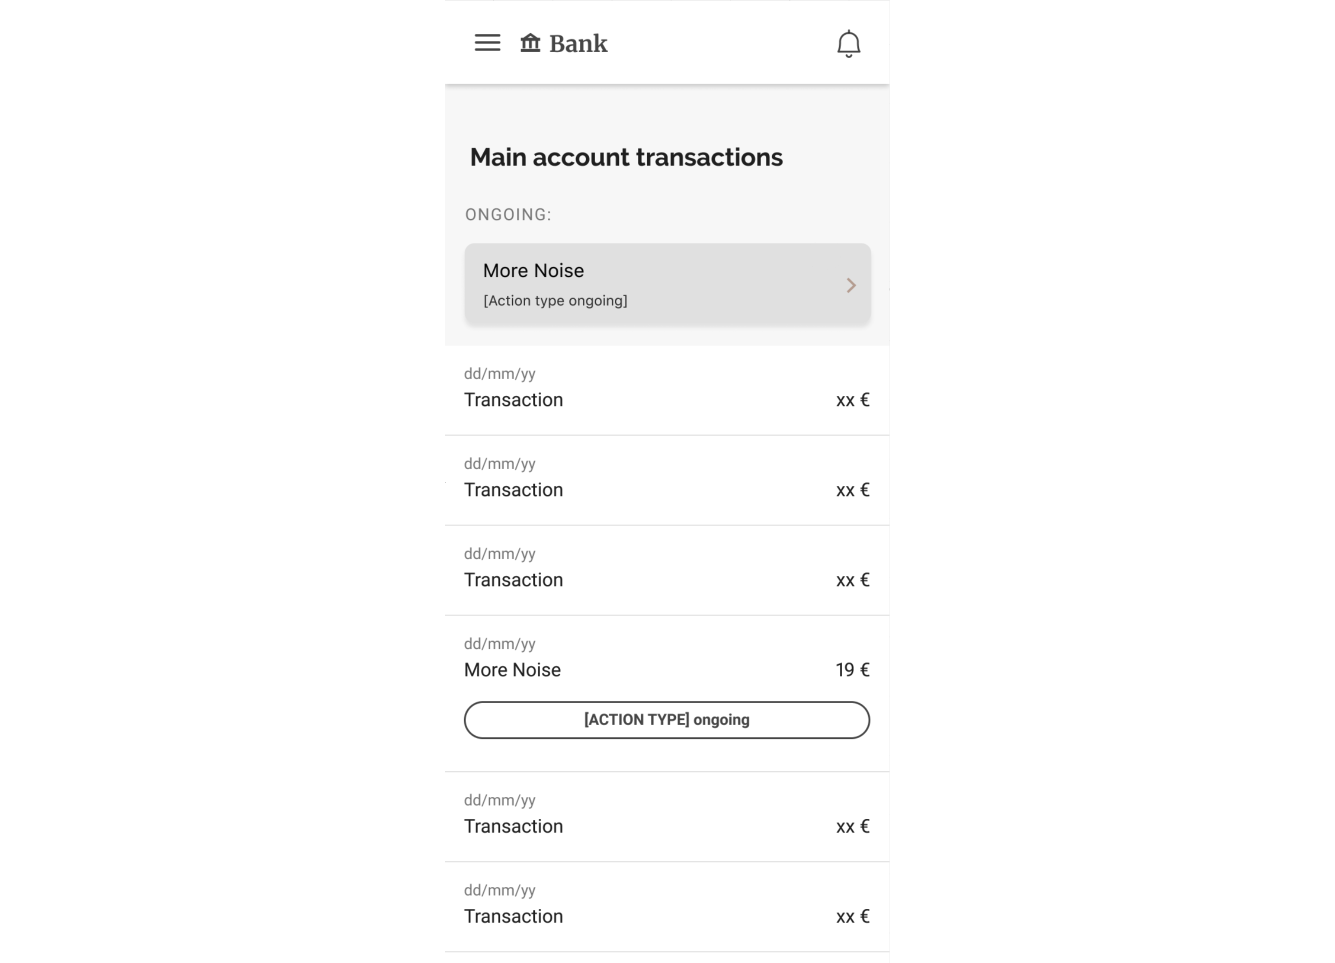 Order status on transactions